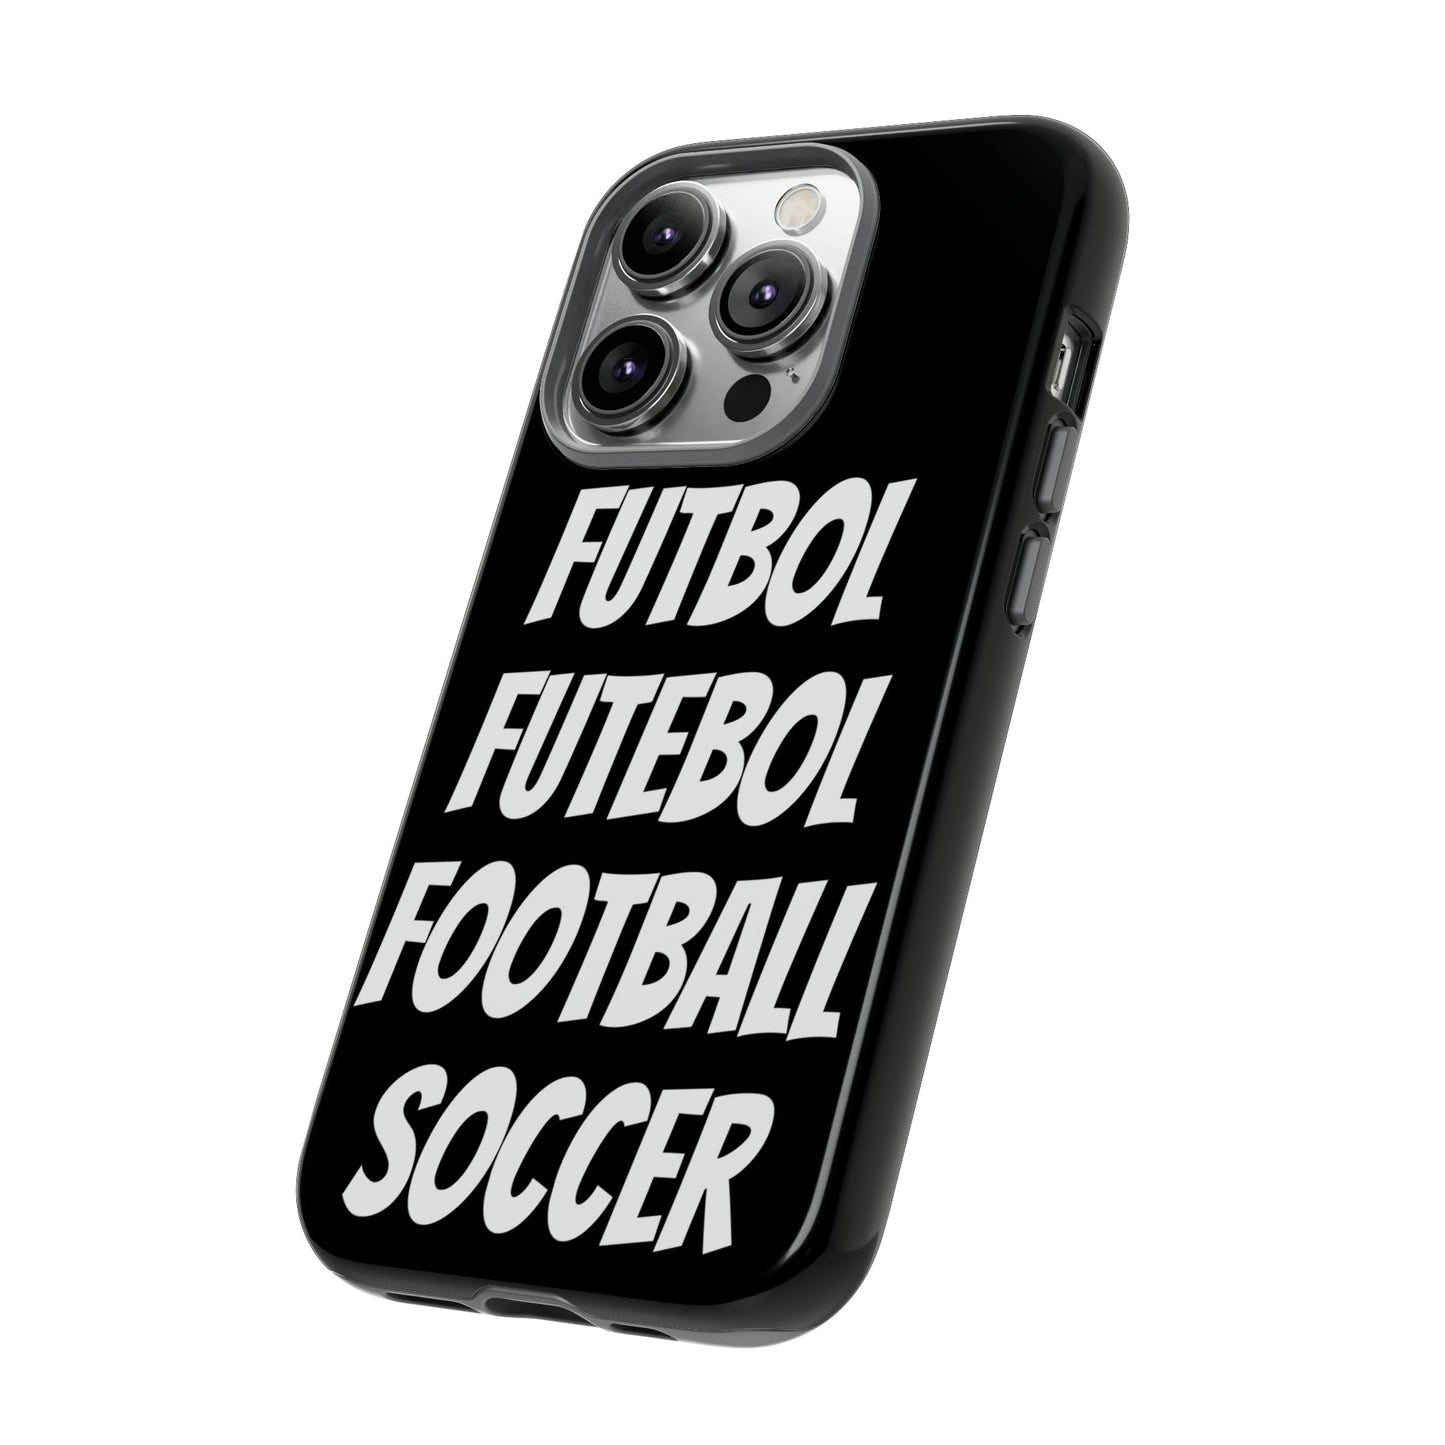 Futbol Futebol Football Soccer Tough Phone Case